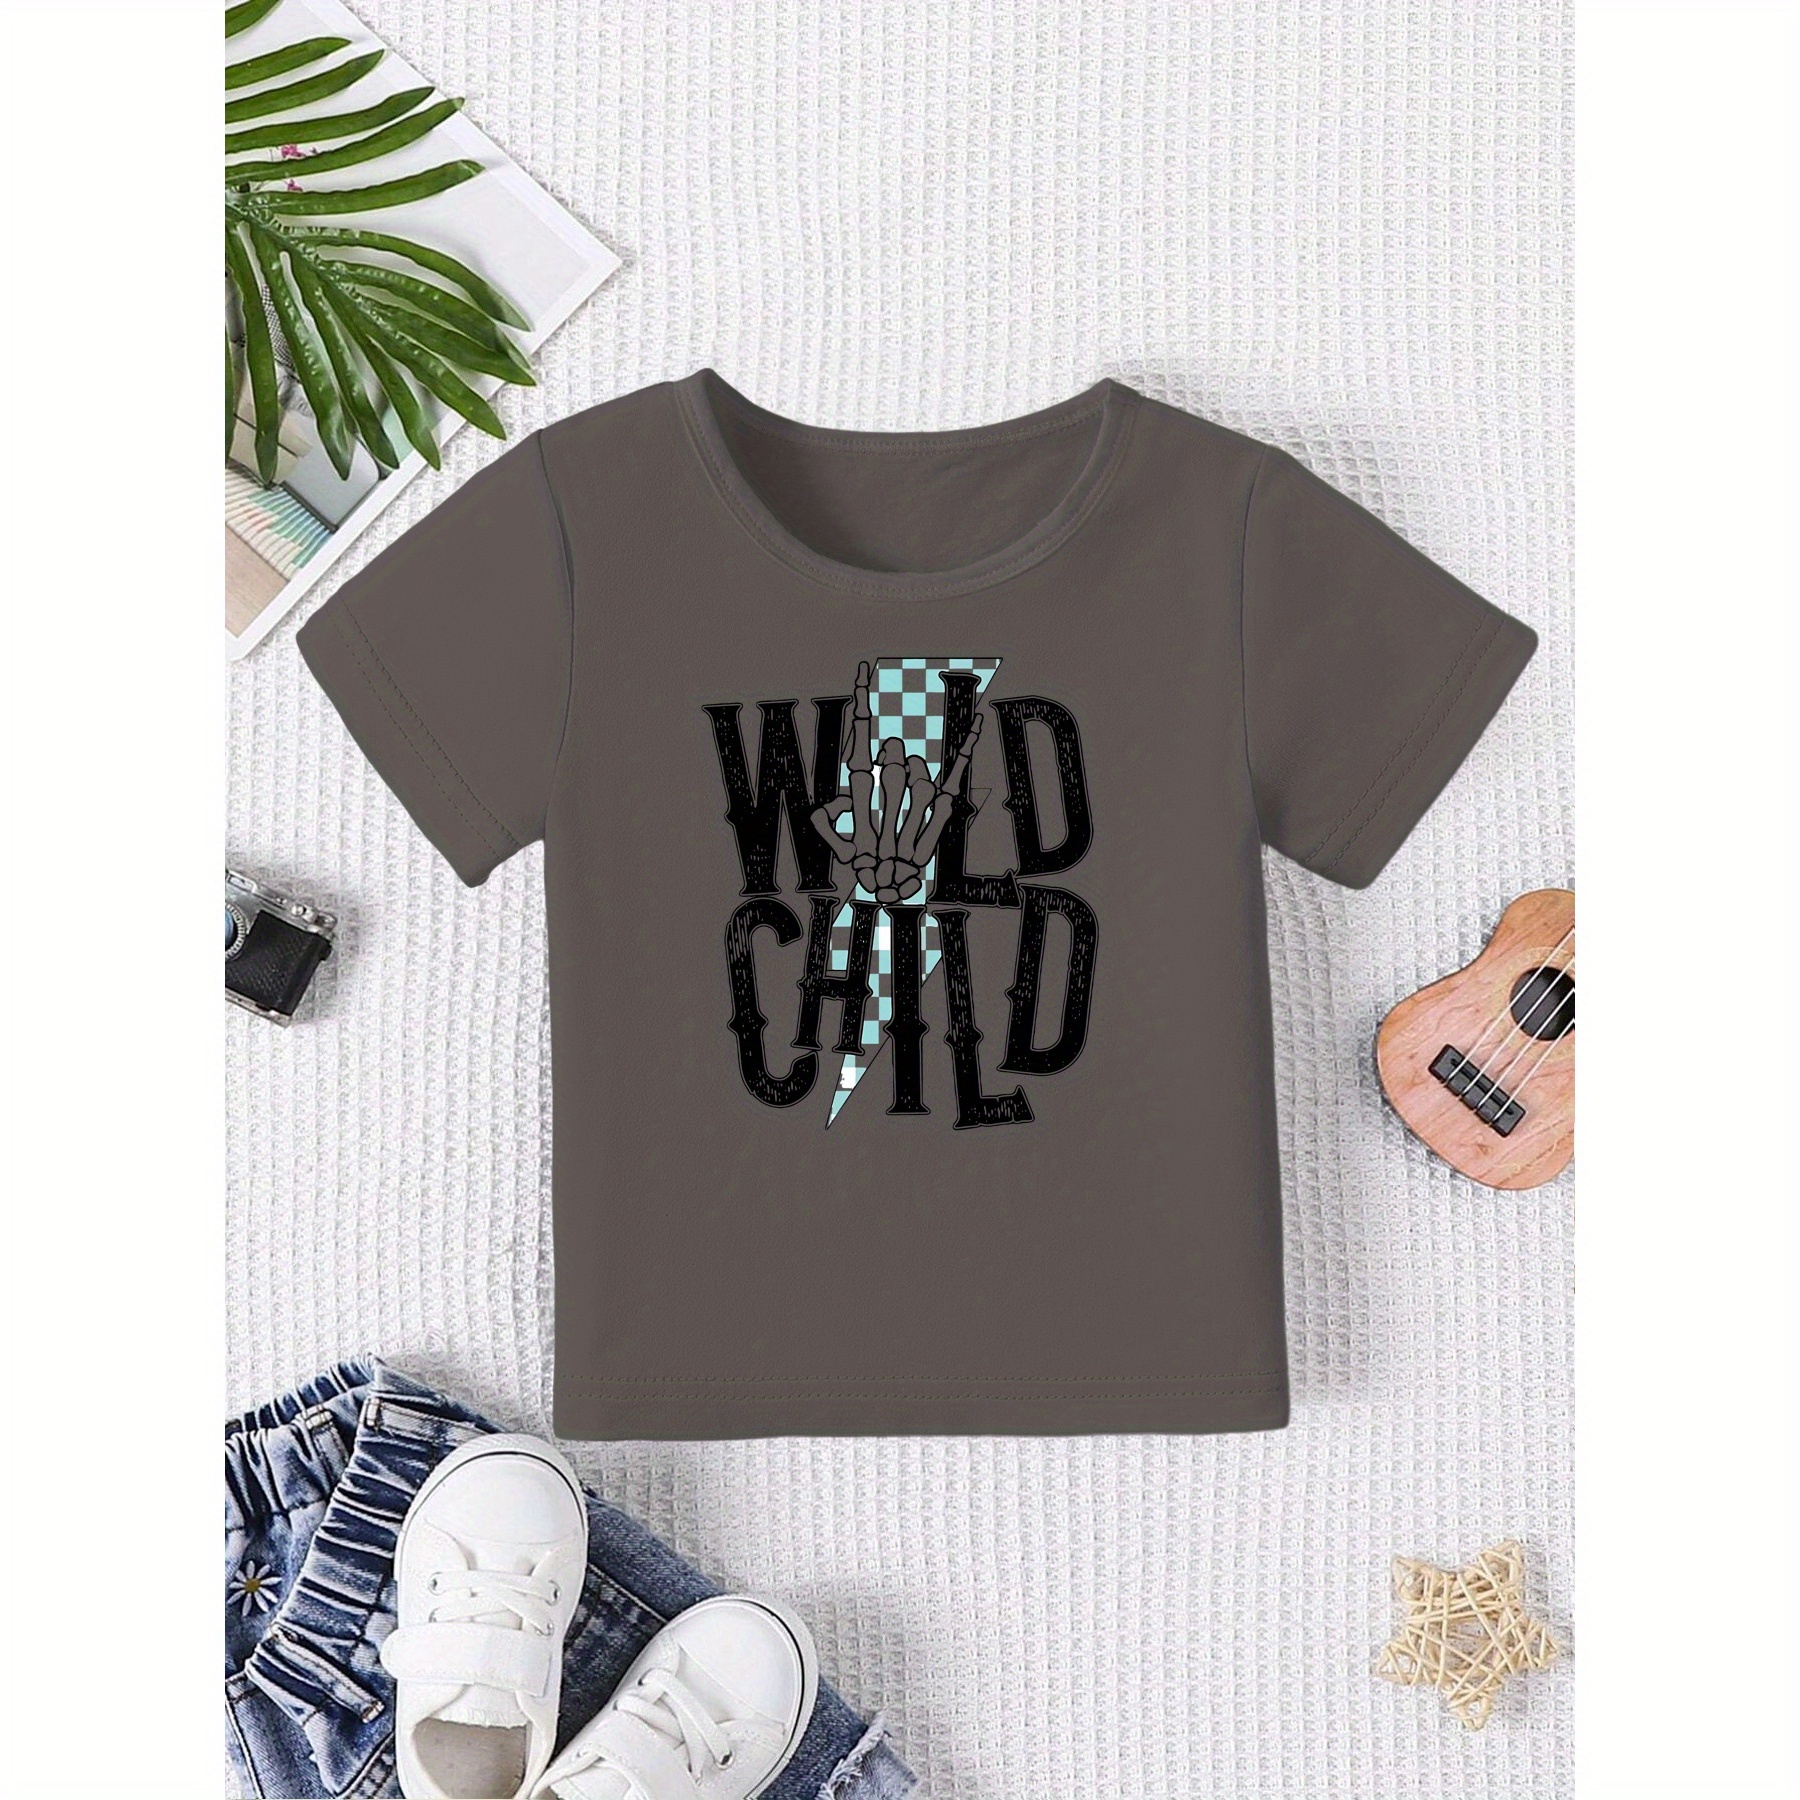 

Wild Child Print Baby Boys Cotton Short Sleeve T-shirt, Comfortable Crew Neck Top, Babys Summer Clothing